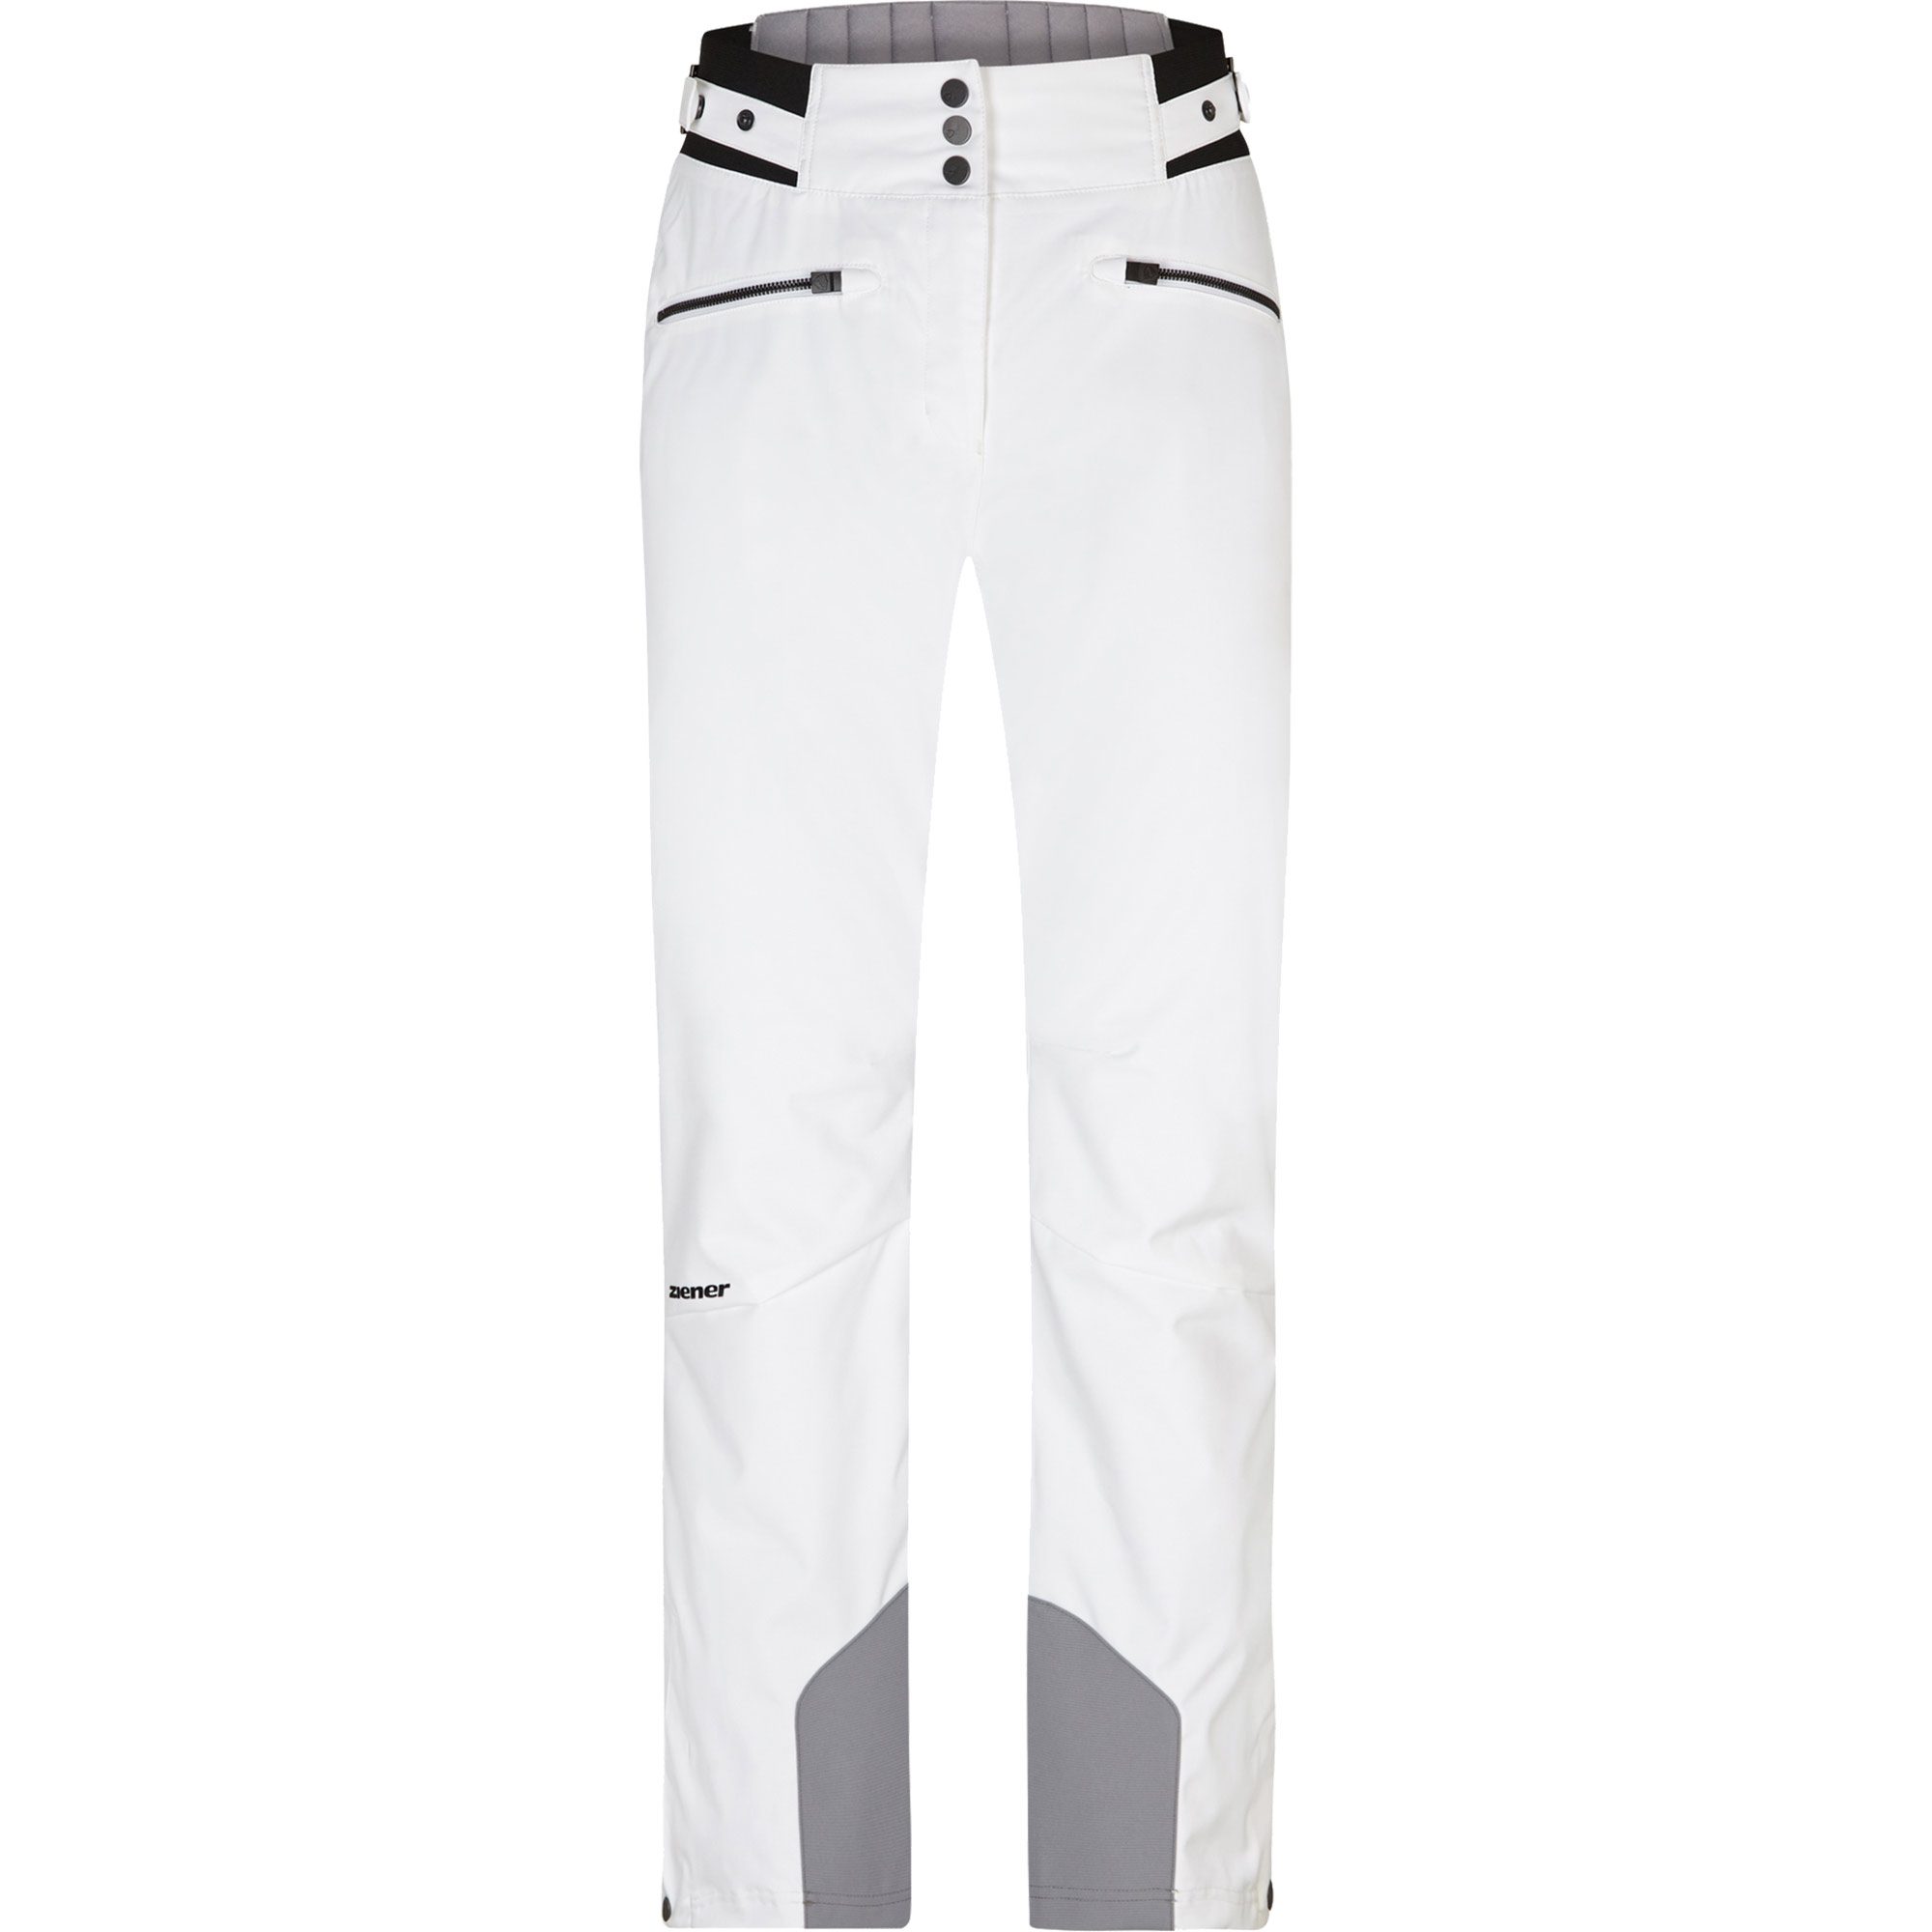 Ziener - Tilla Lady Ski Pants Women white at Sport Bittl Shop